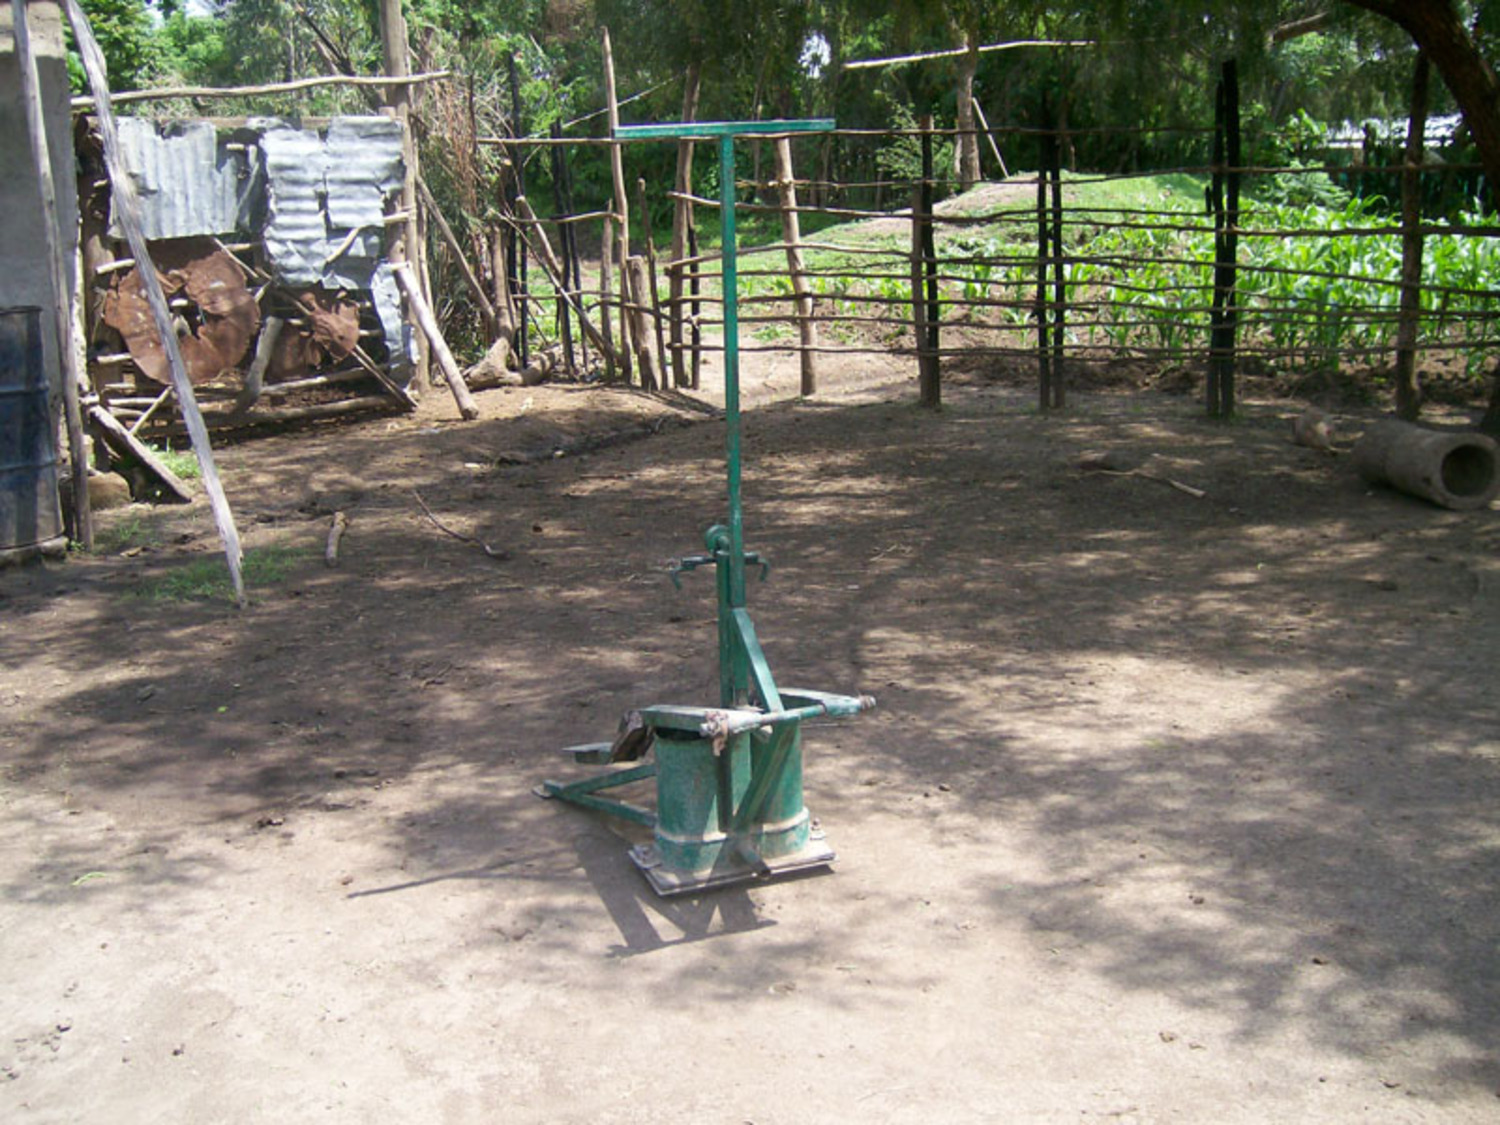 A water pump